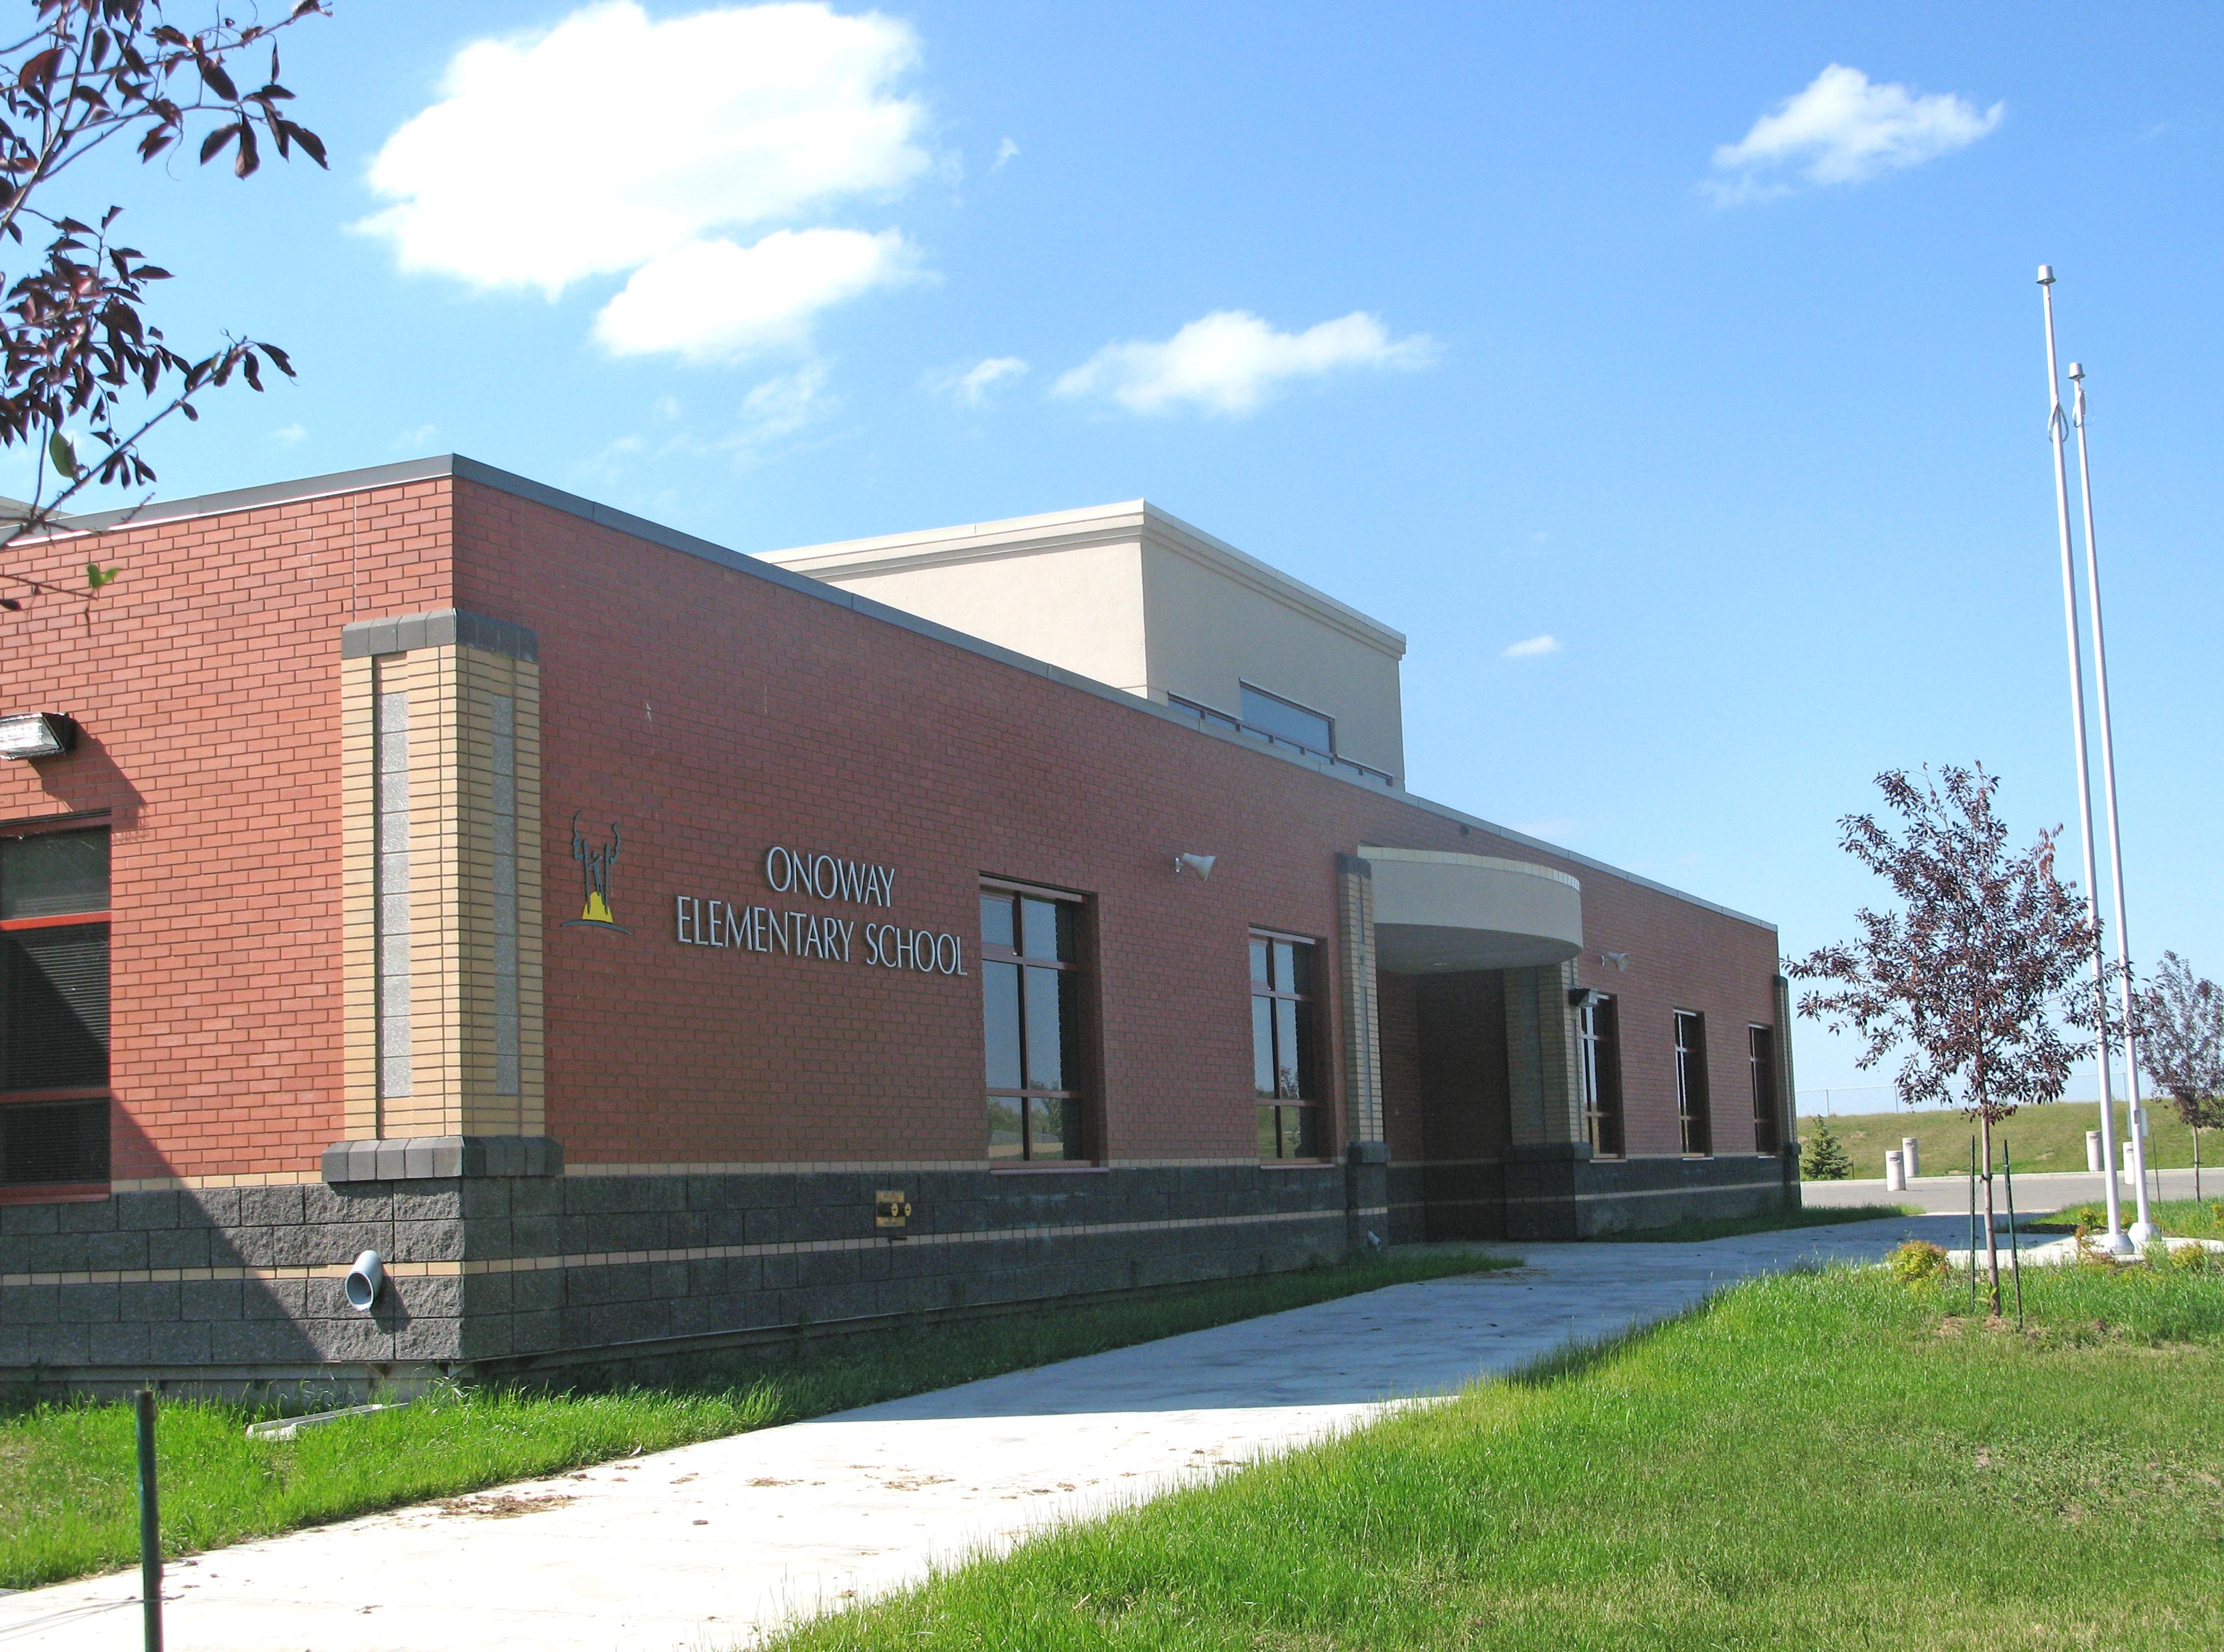 Onoway Elementary School